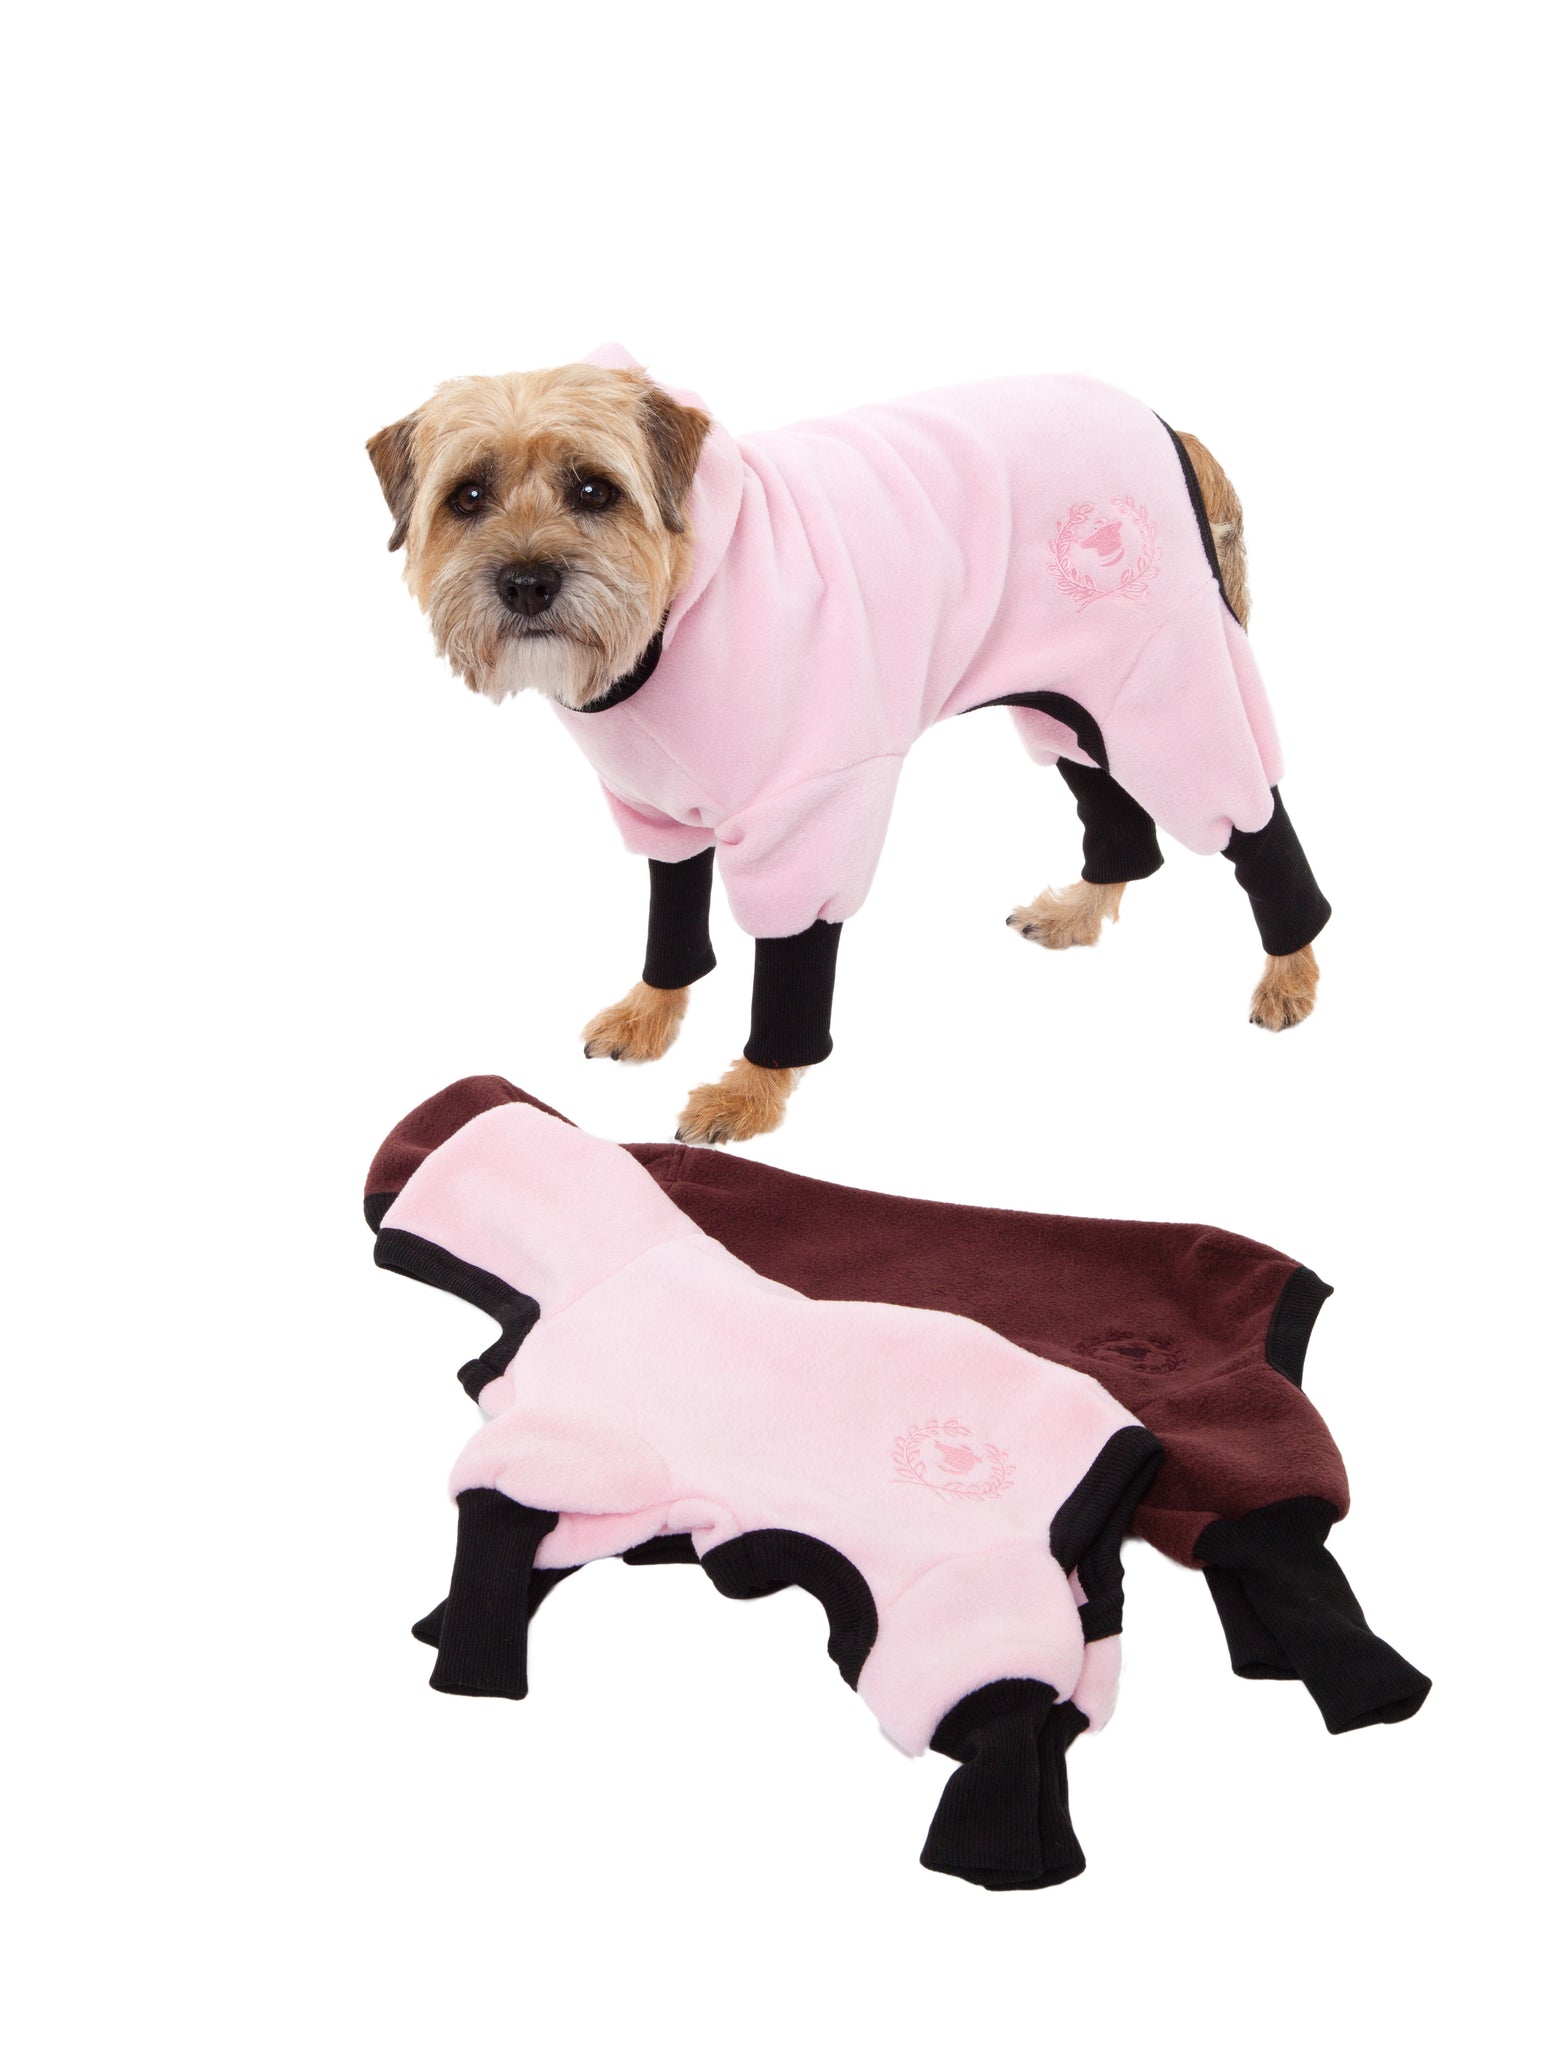 Track Suit - Polar Fleece - Four-Legged - 2 Color Options - Light Pink & Brown